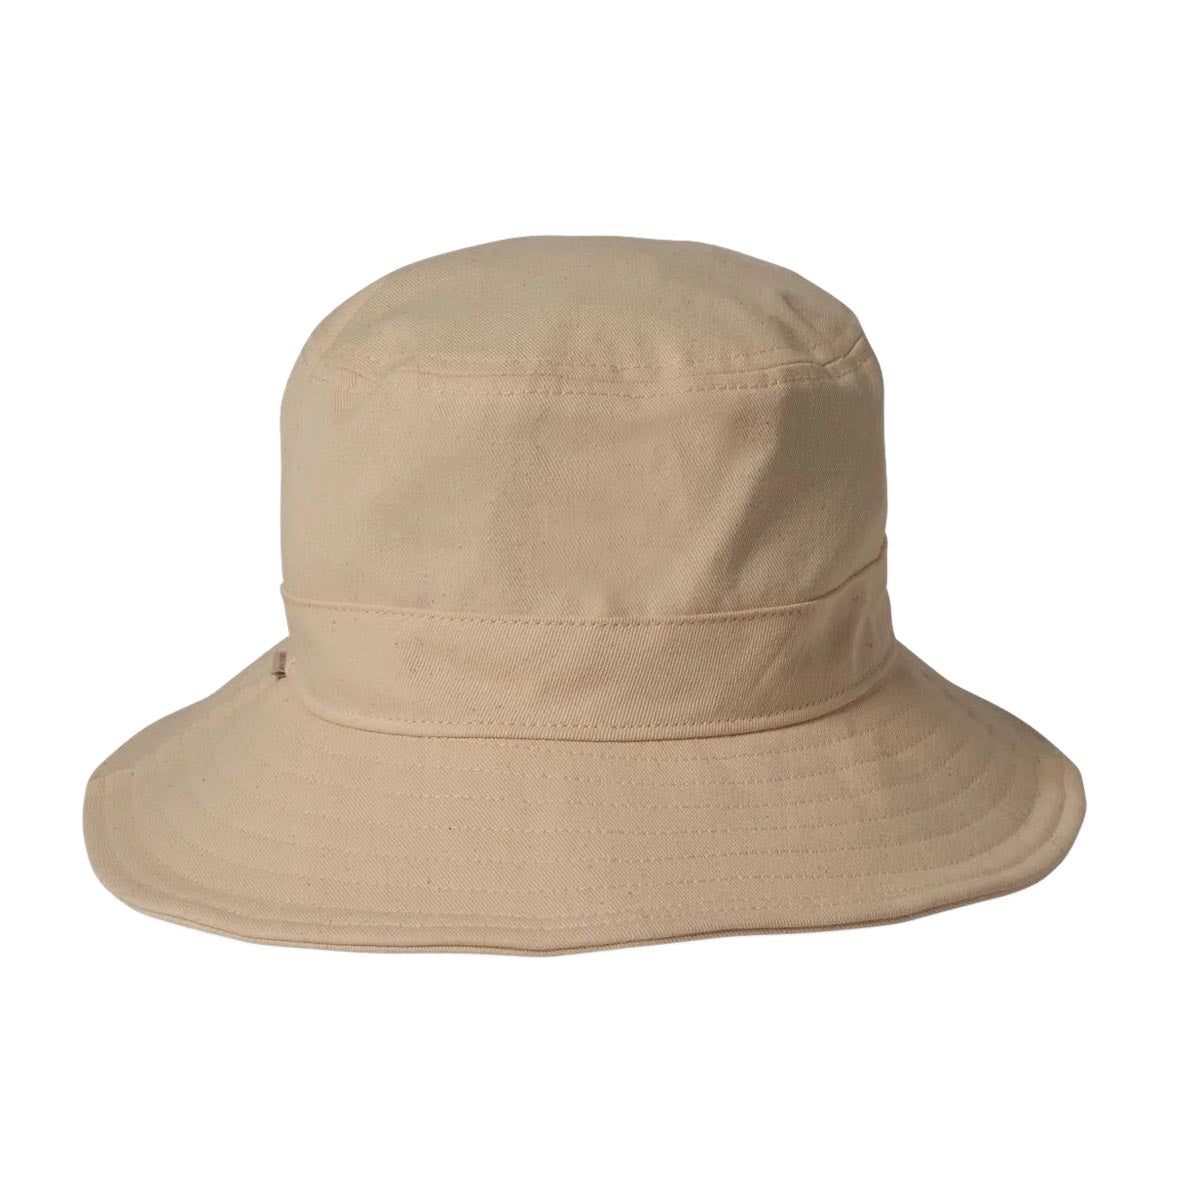 Brixton Petra Packable Bucket Hat - Natural image 3